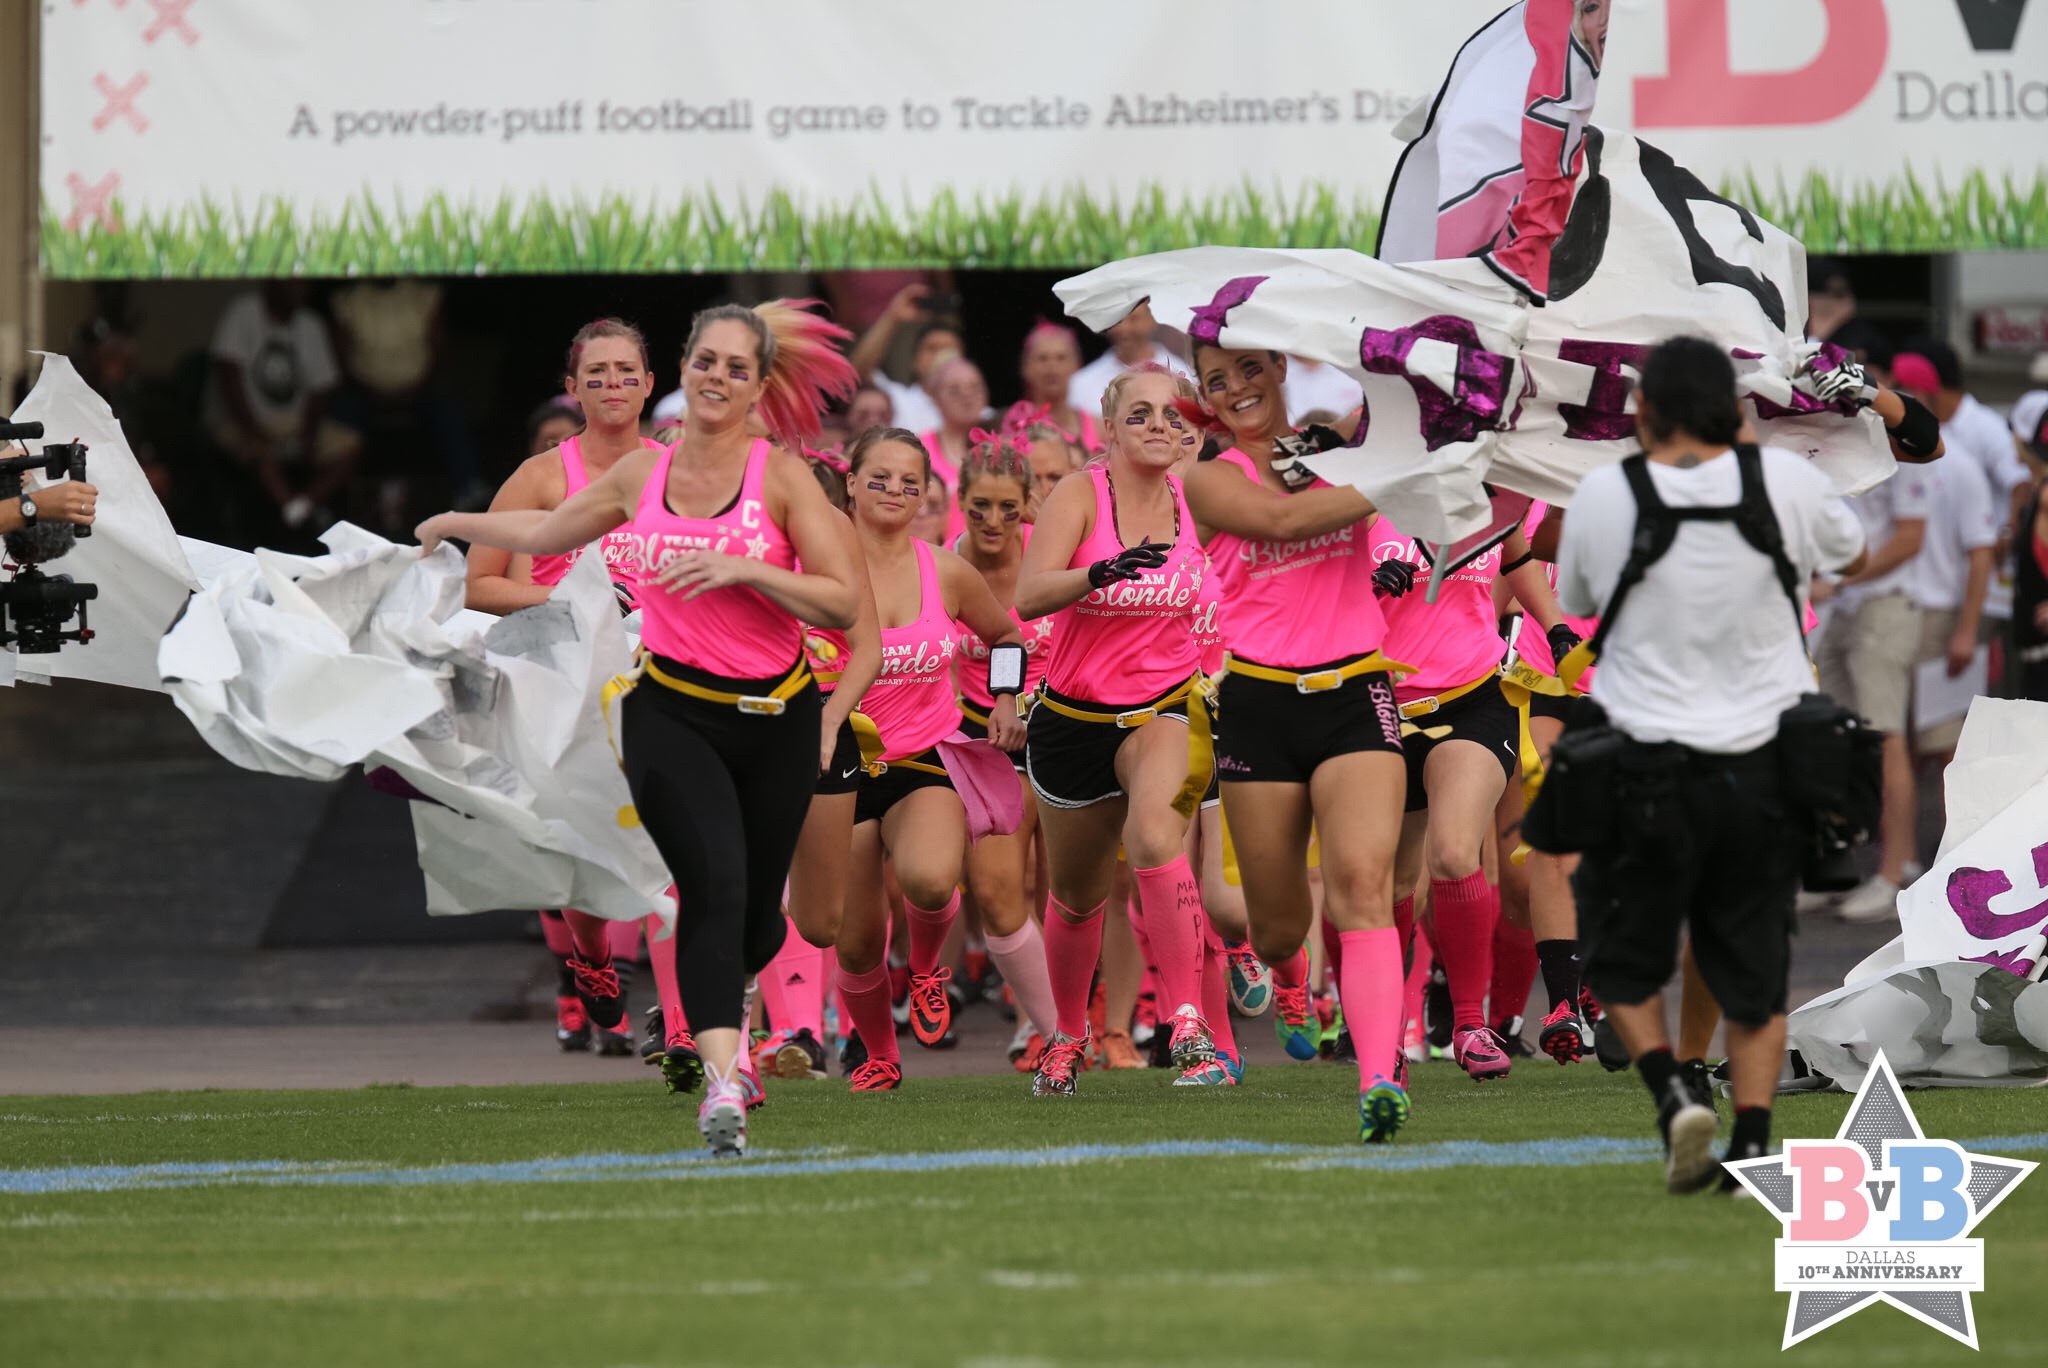 a group of women running on a field